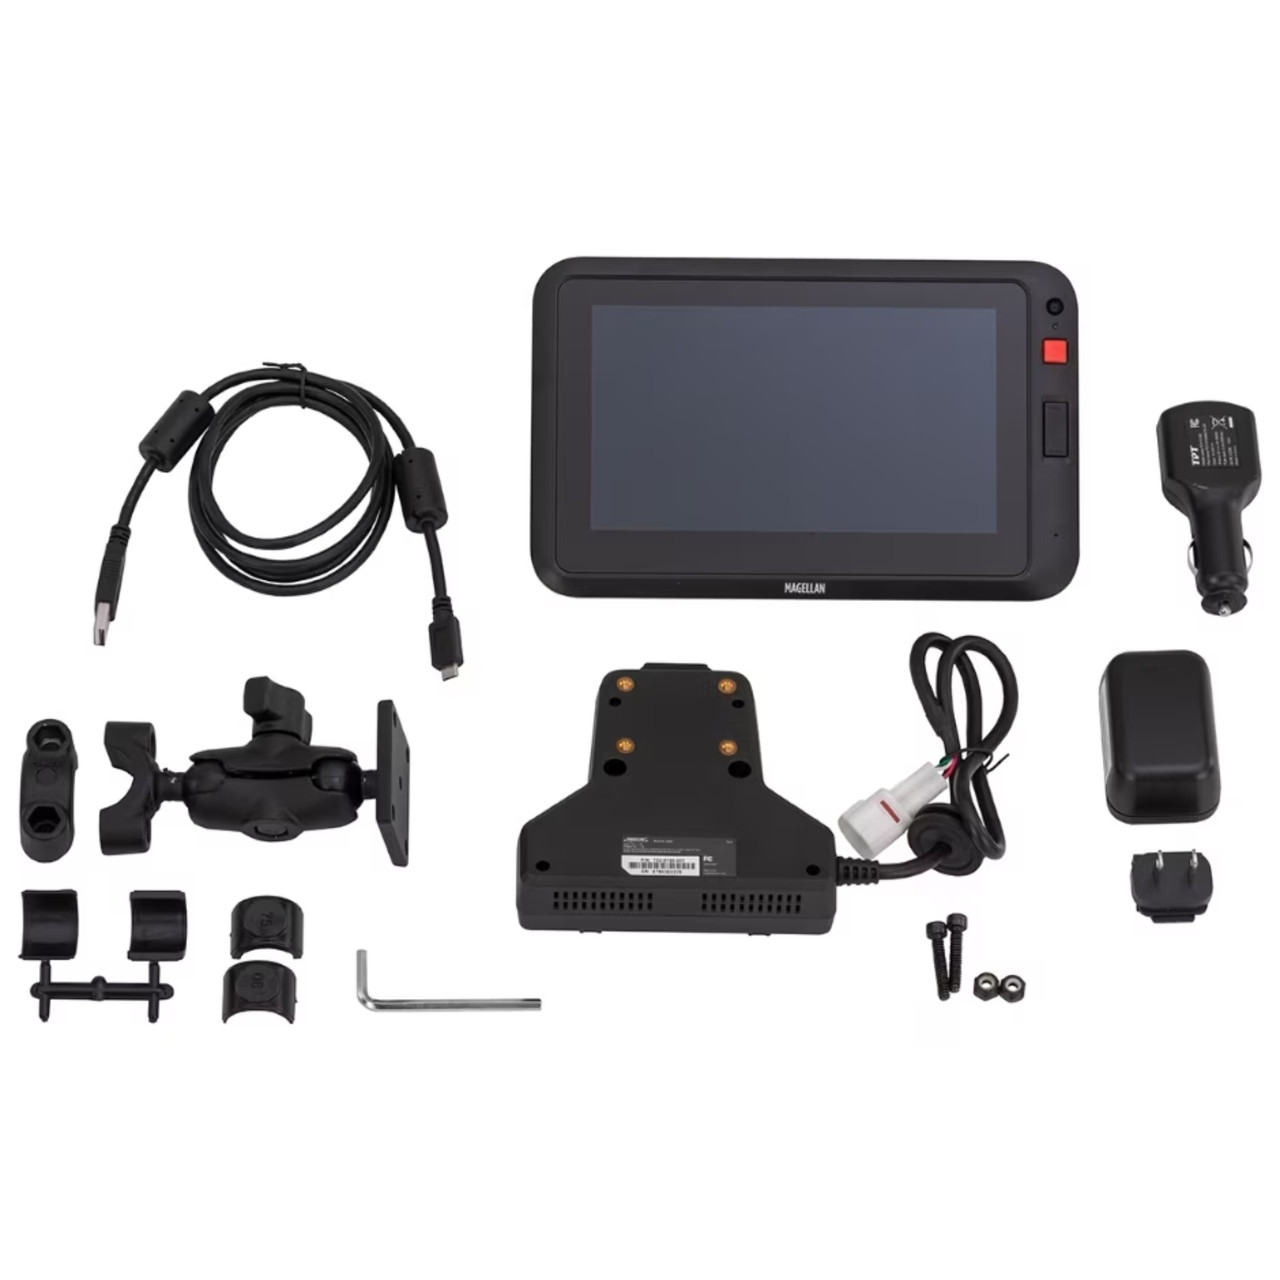 Yamaha New OEM Adventure Pro GPS Kit, B8K-H21G0-V1-00